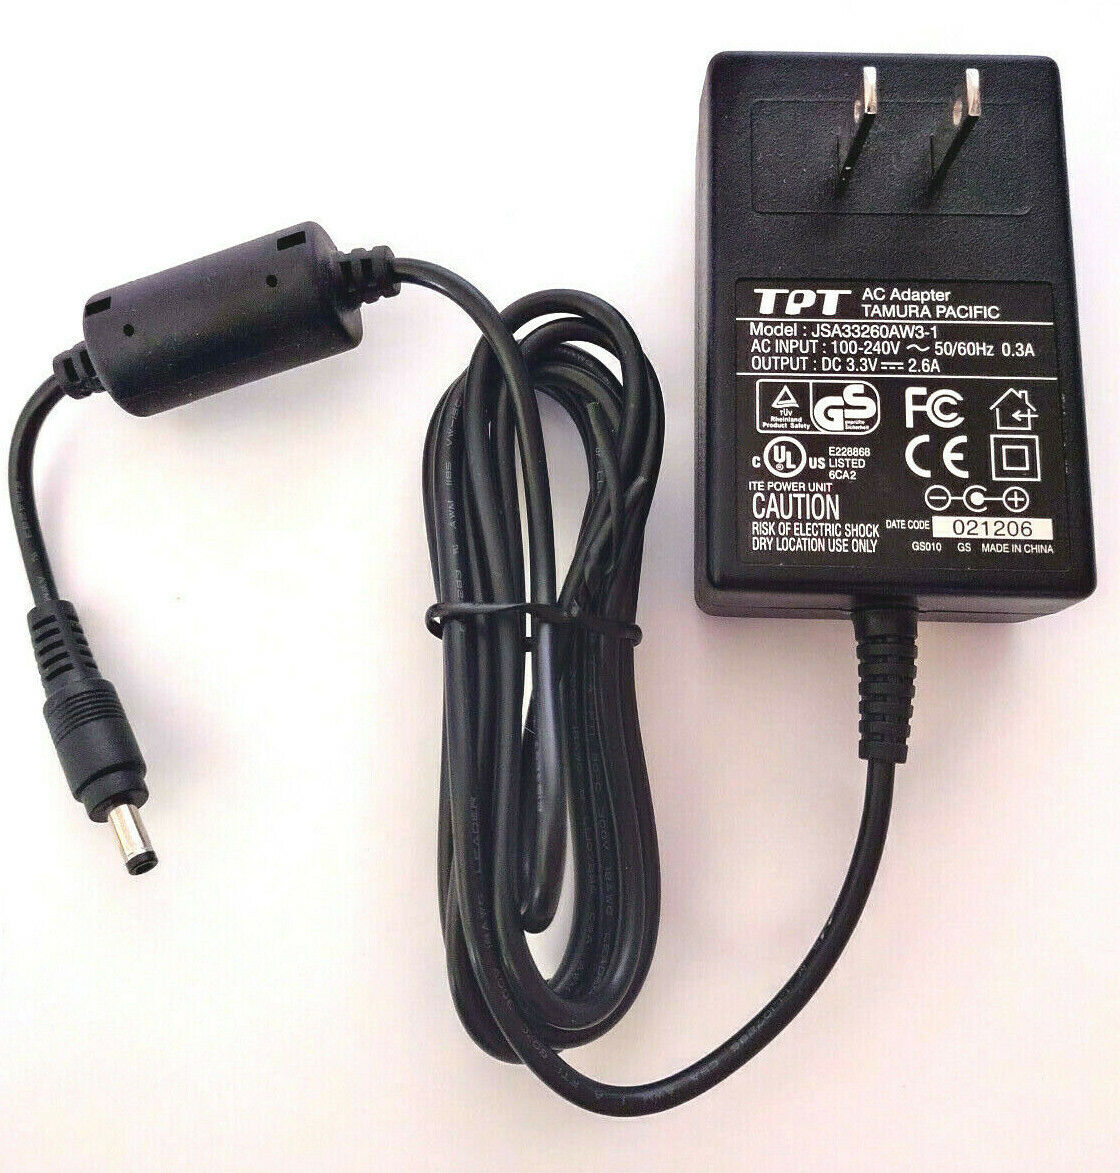 *Brand NEW*For Yamaha PSR170 PSR-275 Keyboard Wall Charger AC Adapter Power Supply Cord PSU - Click Image to Close